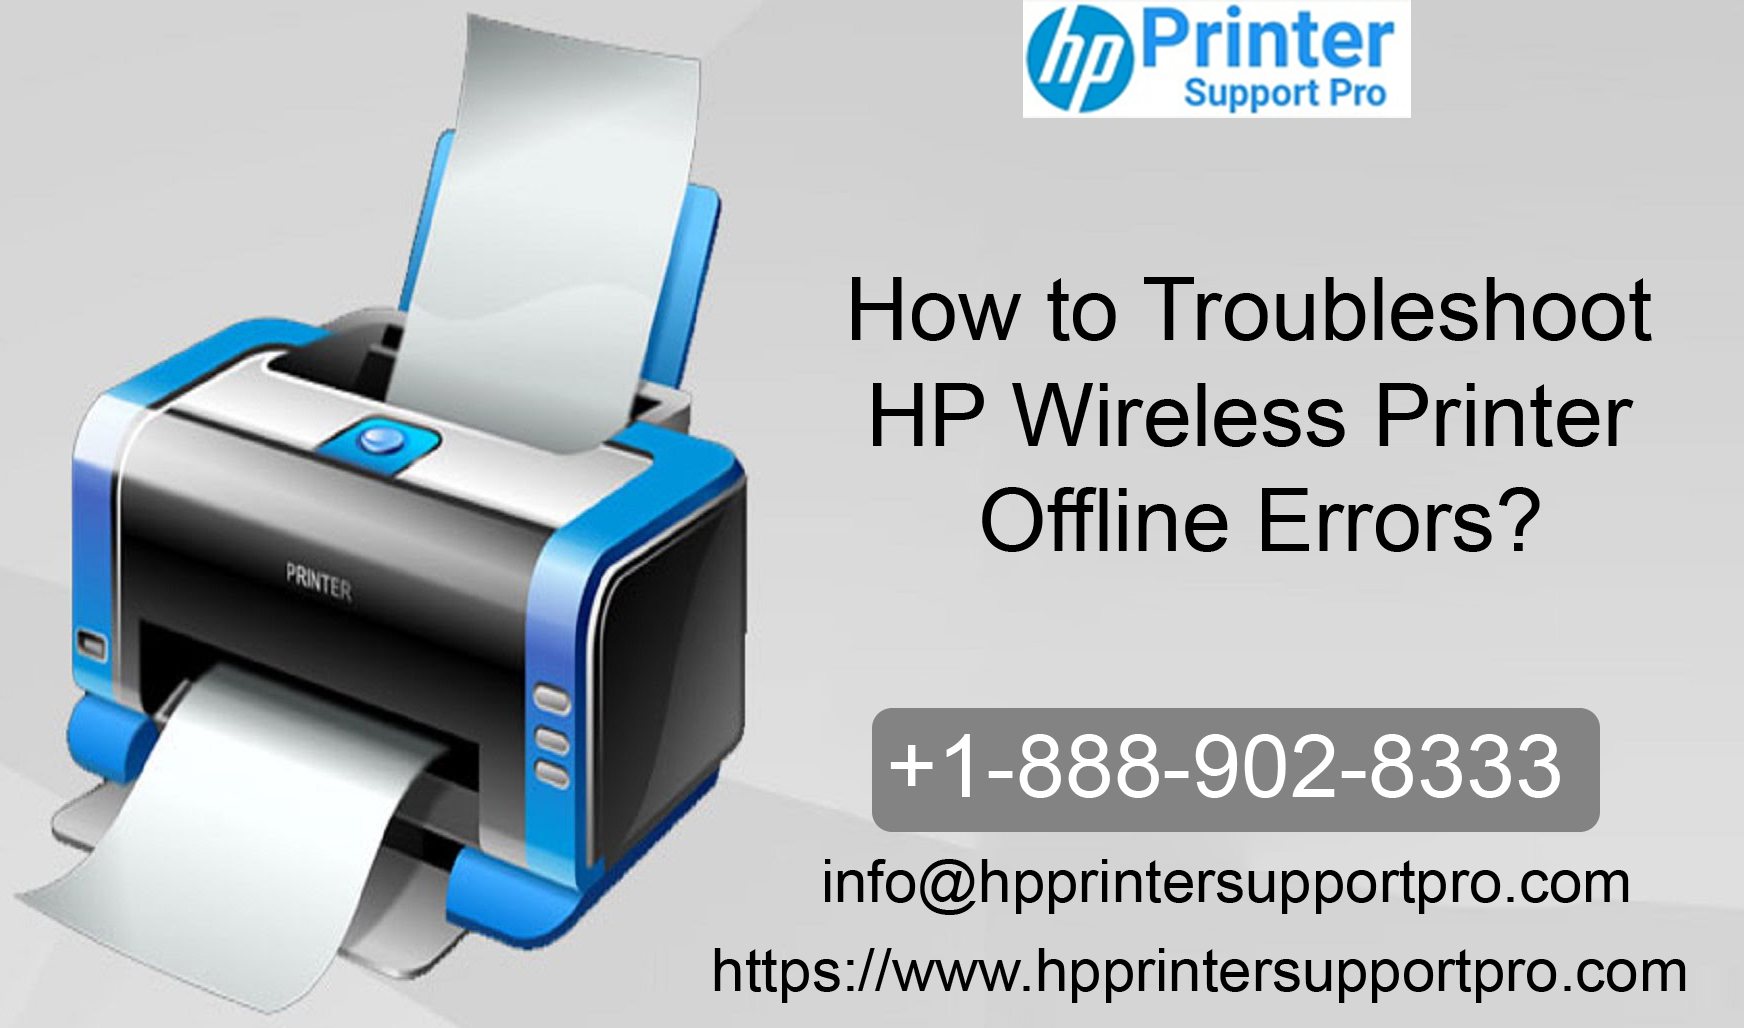 How to Troubleshoot HP Wireless Printer Offline Errors?